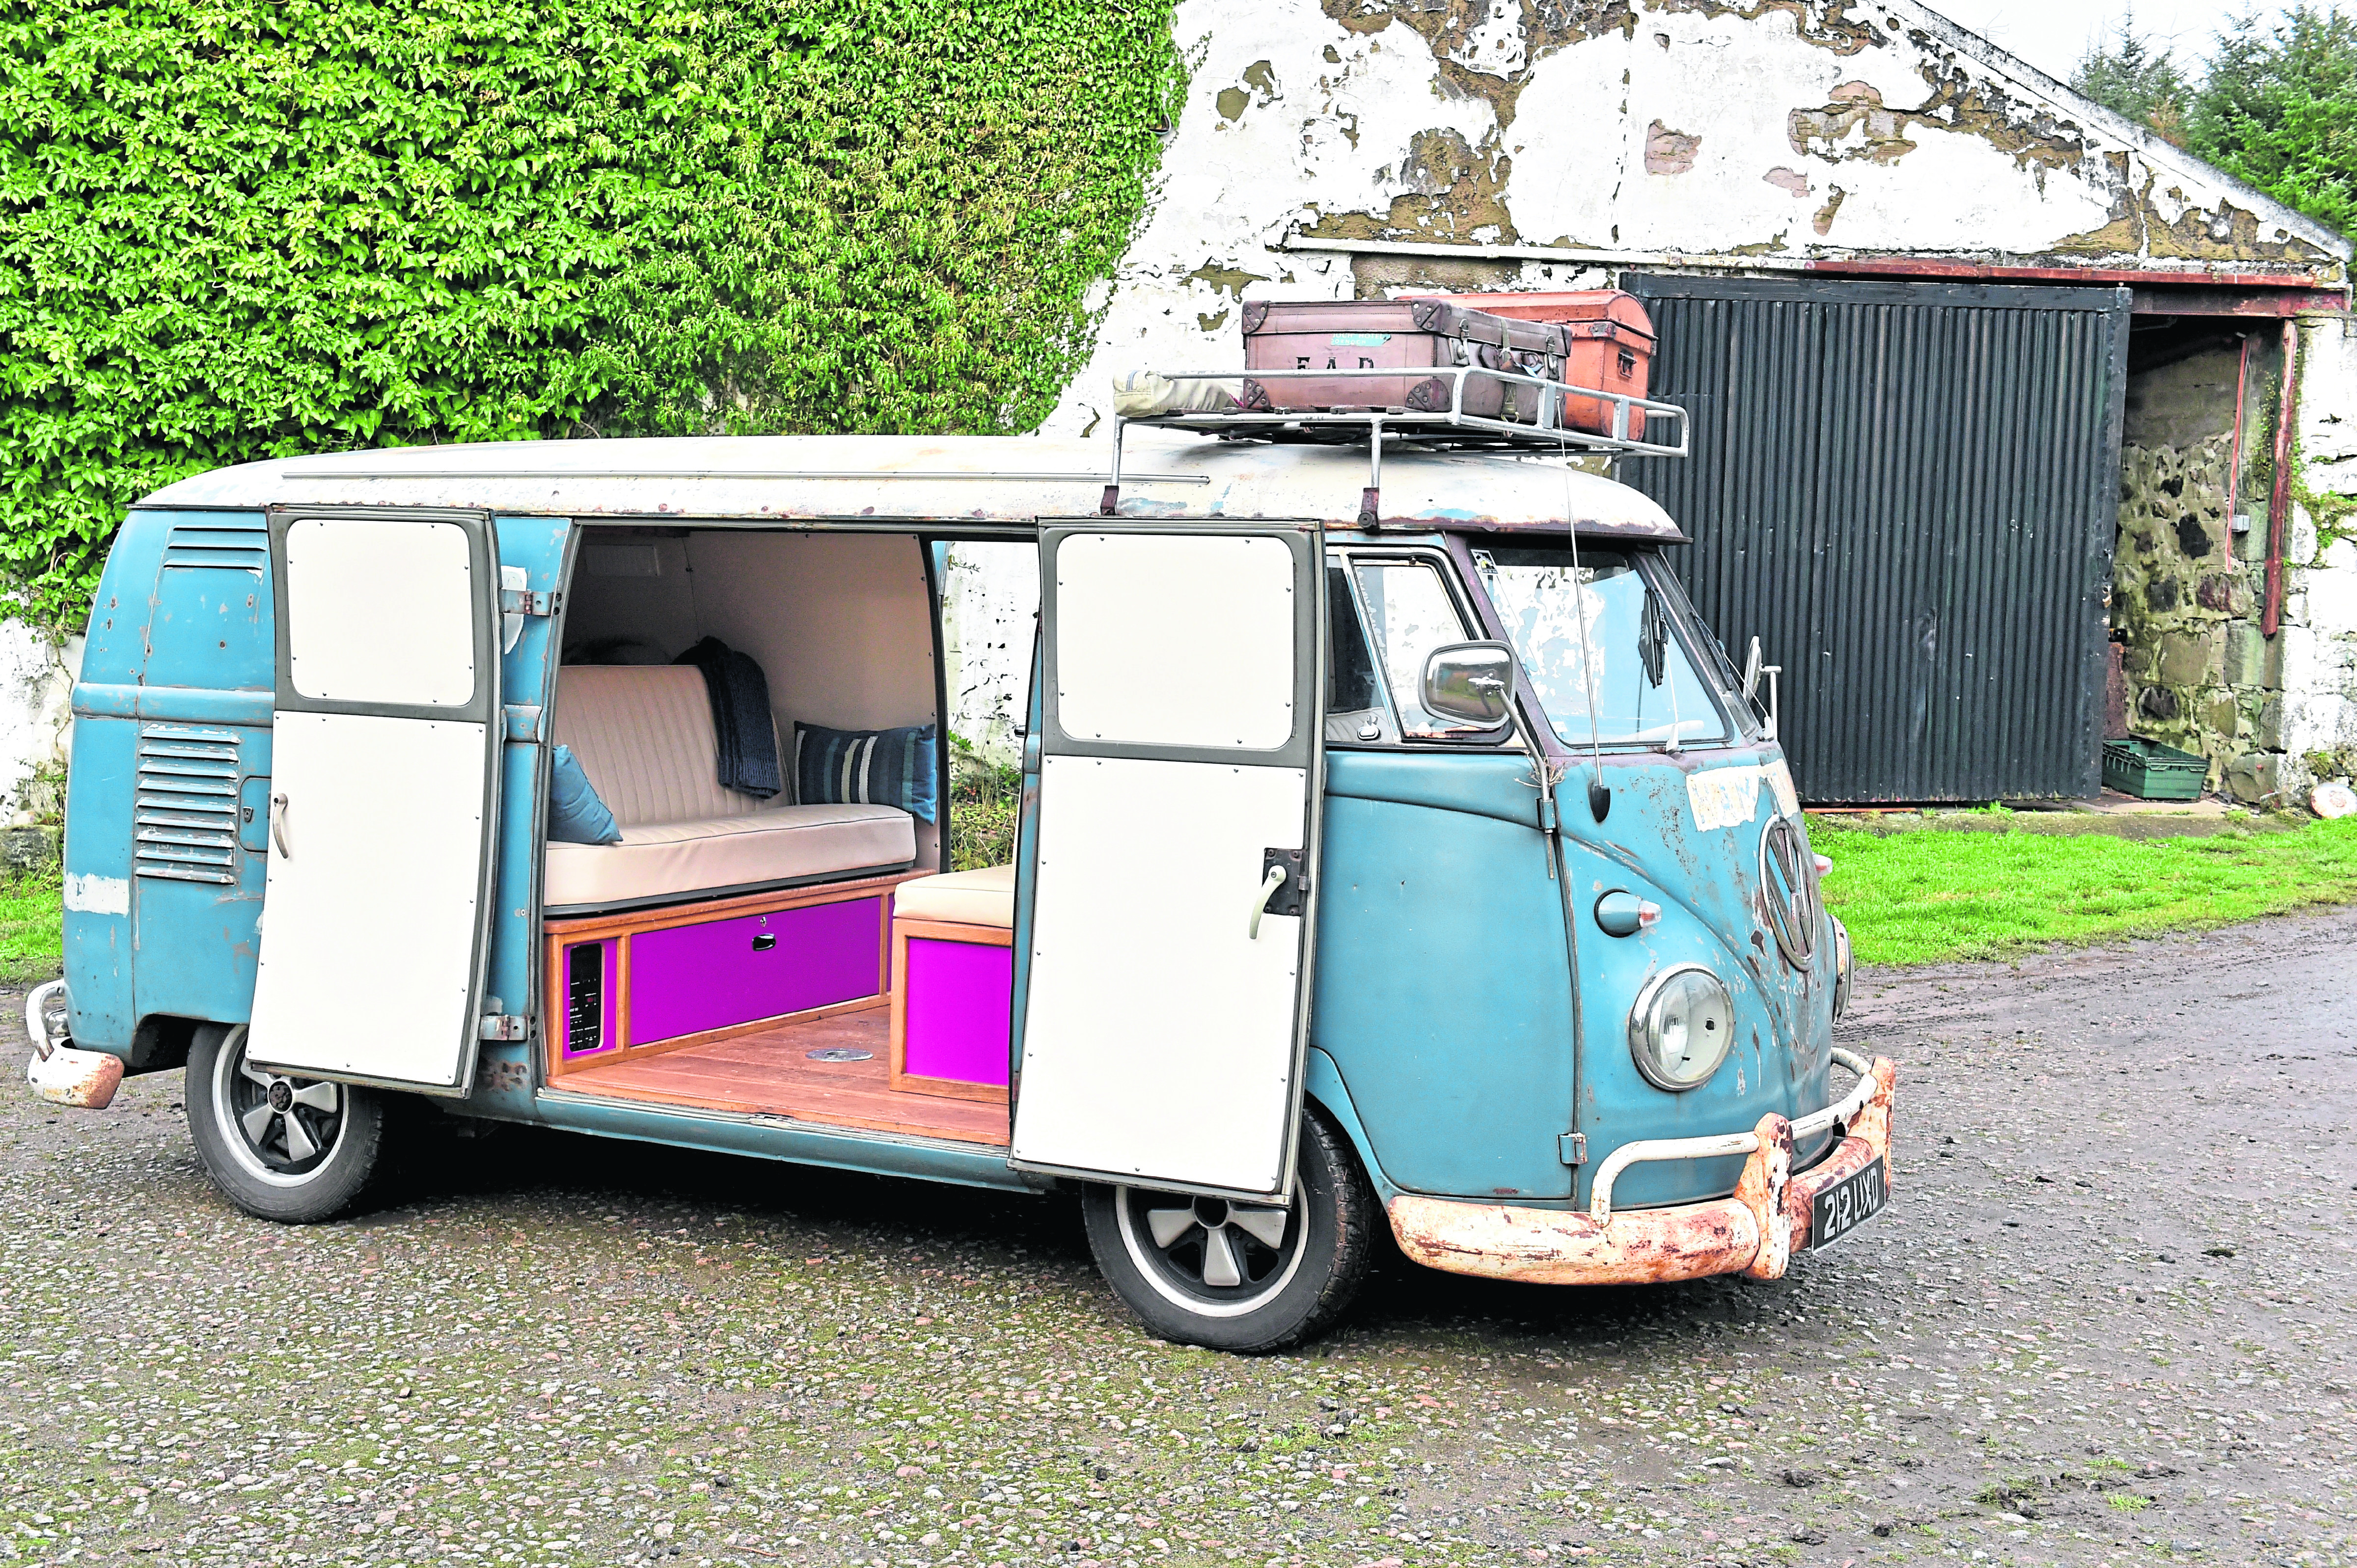 VW Camper.
Picture by Colin Rennie.